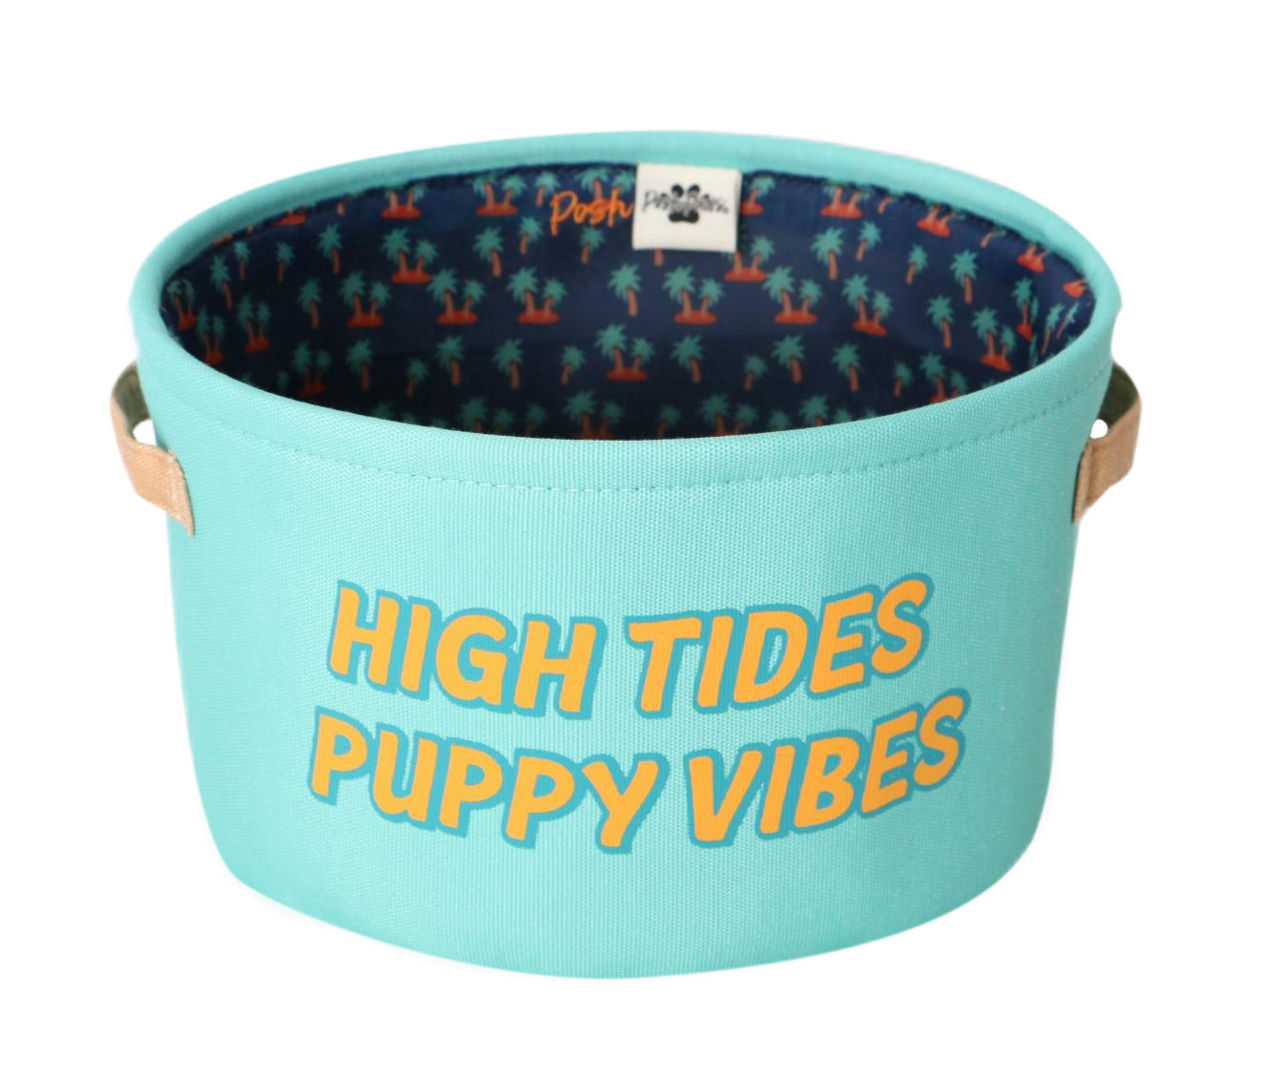 Medium "High Tides Puppy Vibes" Blue Palm Fabric Toy Bin